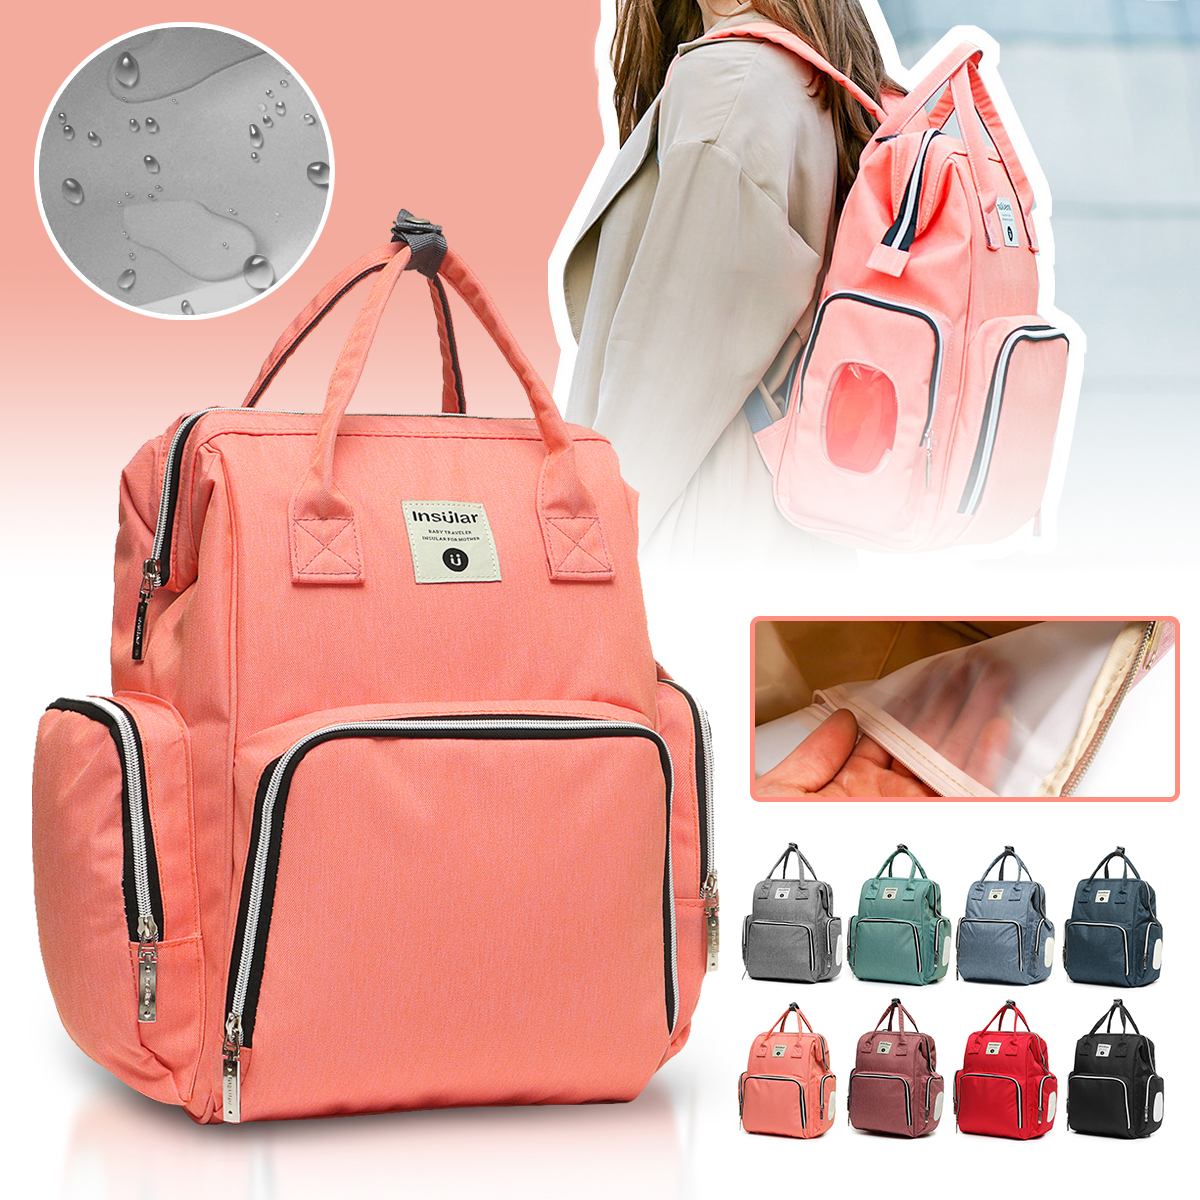 Oxford-Cloth-Waterproof-Travel-Backpack-Multi-function-Mommy-Bag-Baby-Diaper-Storage-Bag-Backpack-1632162-1